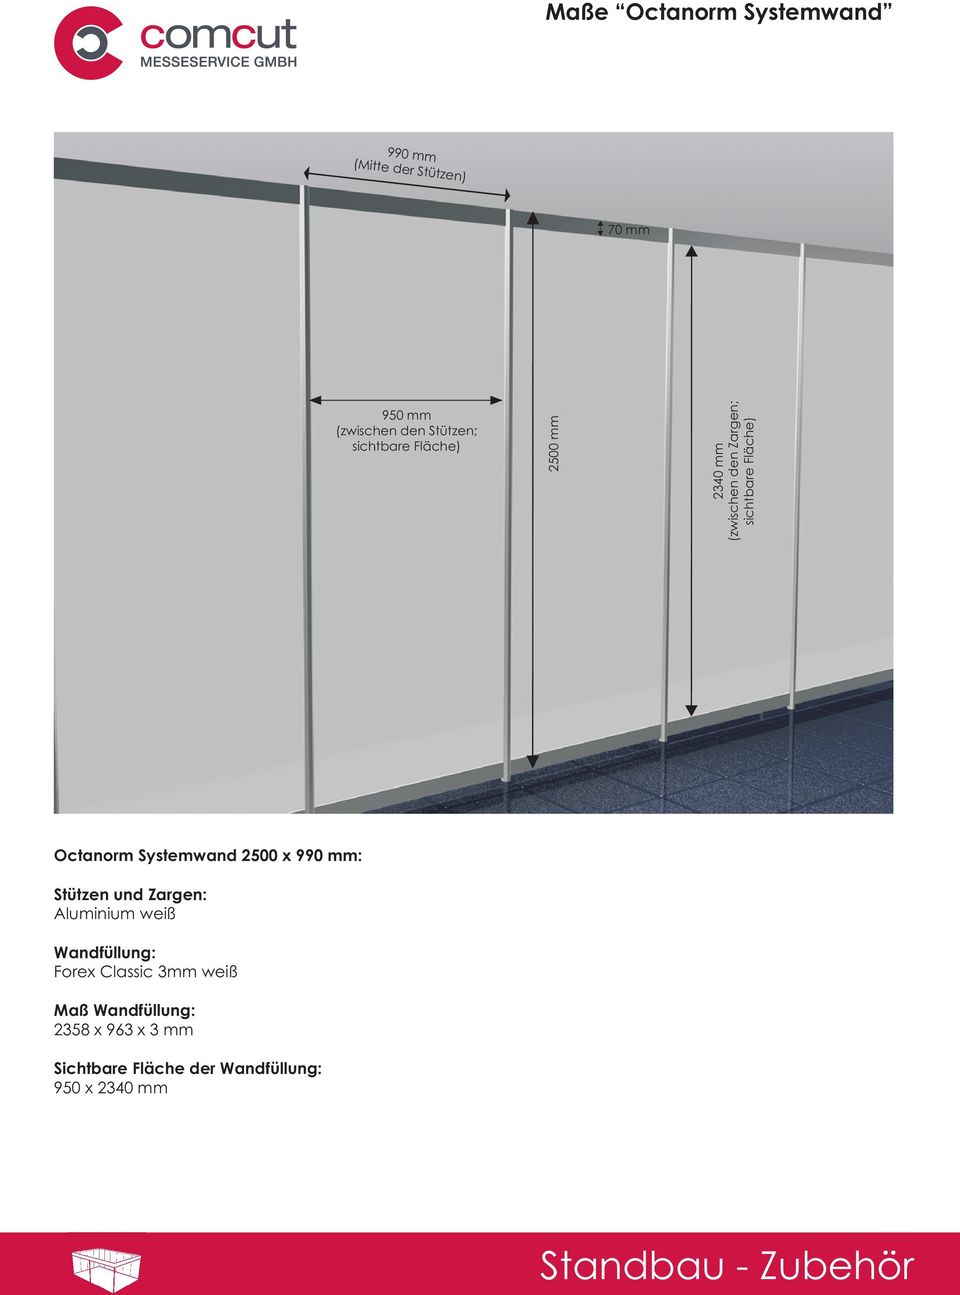 Systemwand 2500 x 990 mm: Stützen und Zargen: Aluminium weiß Wandfüllung: Forex Classic 3mm